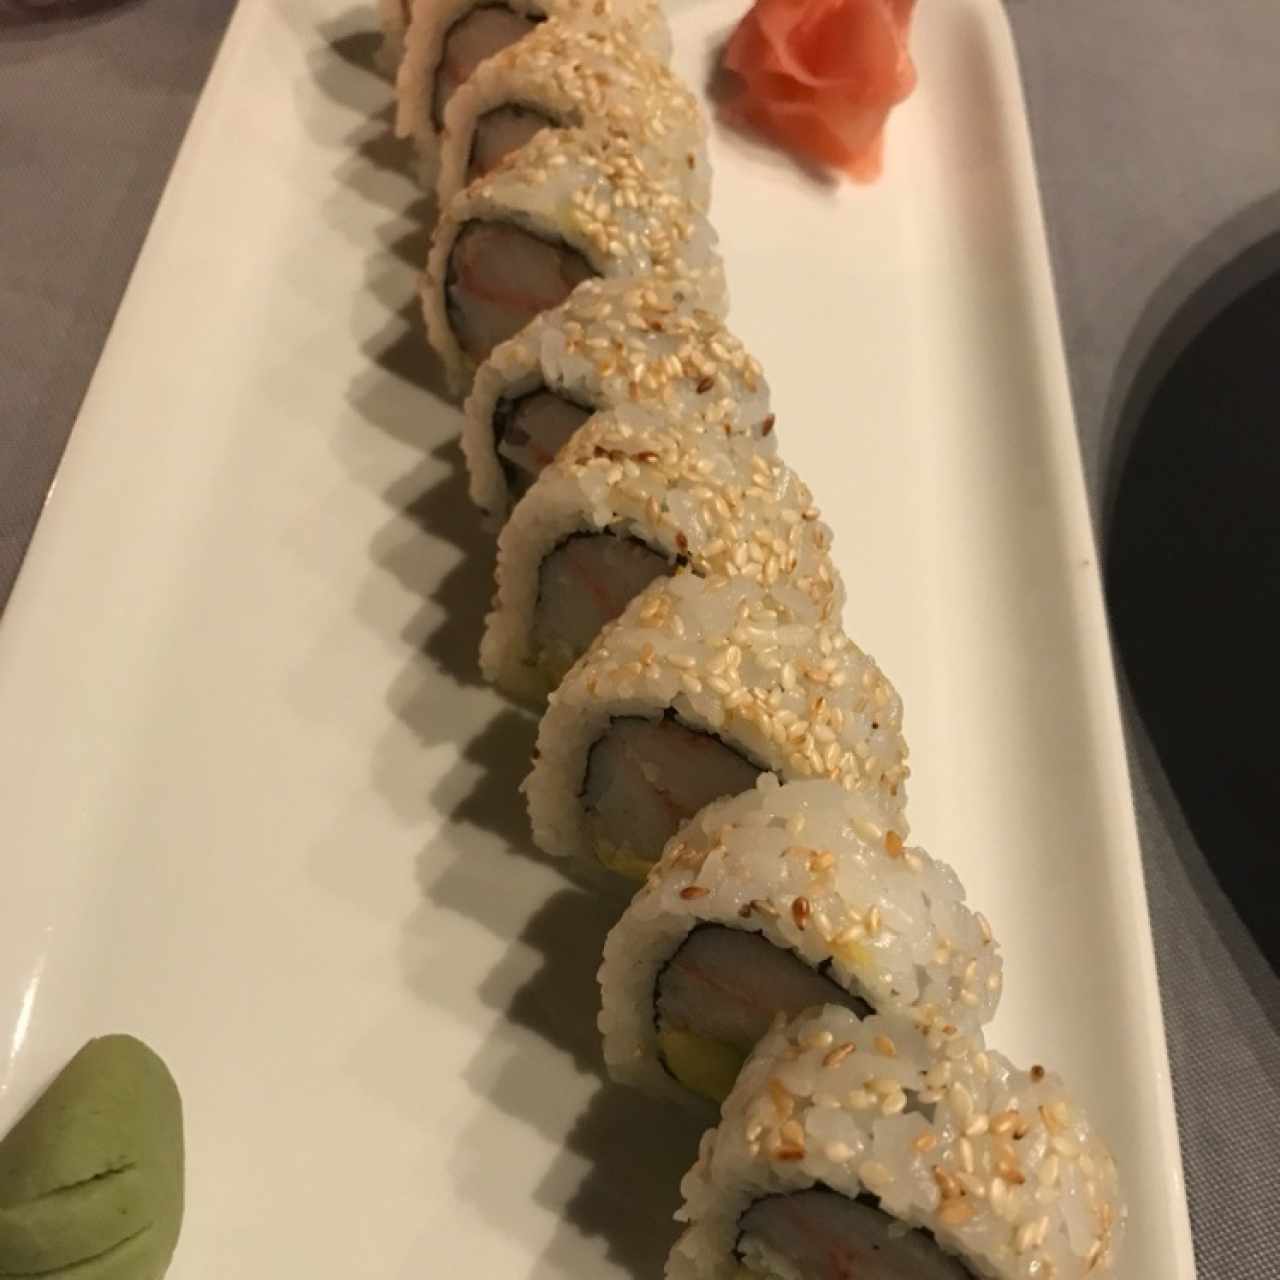 Sushi rolls/Makis - California